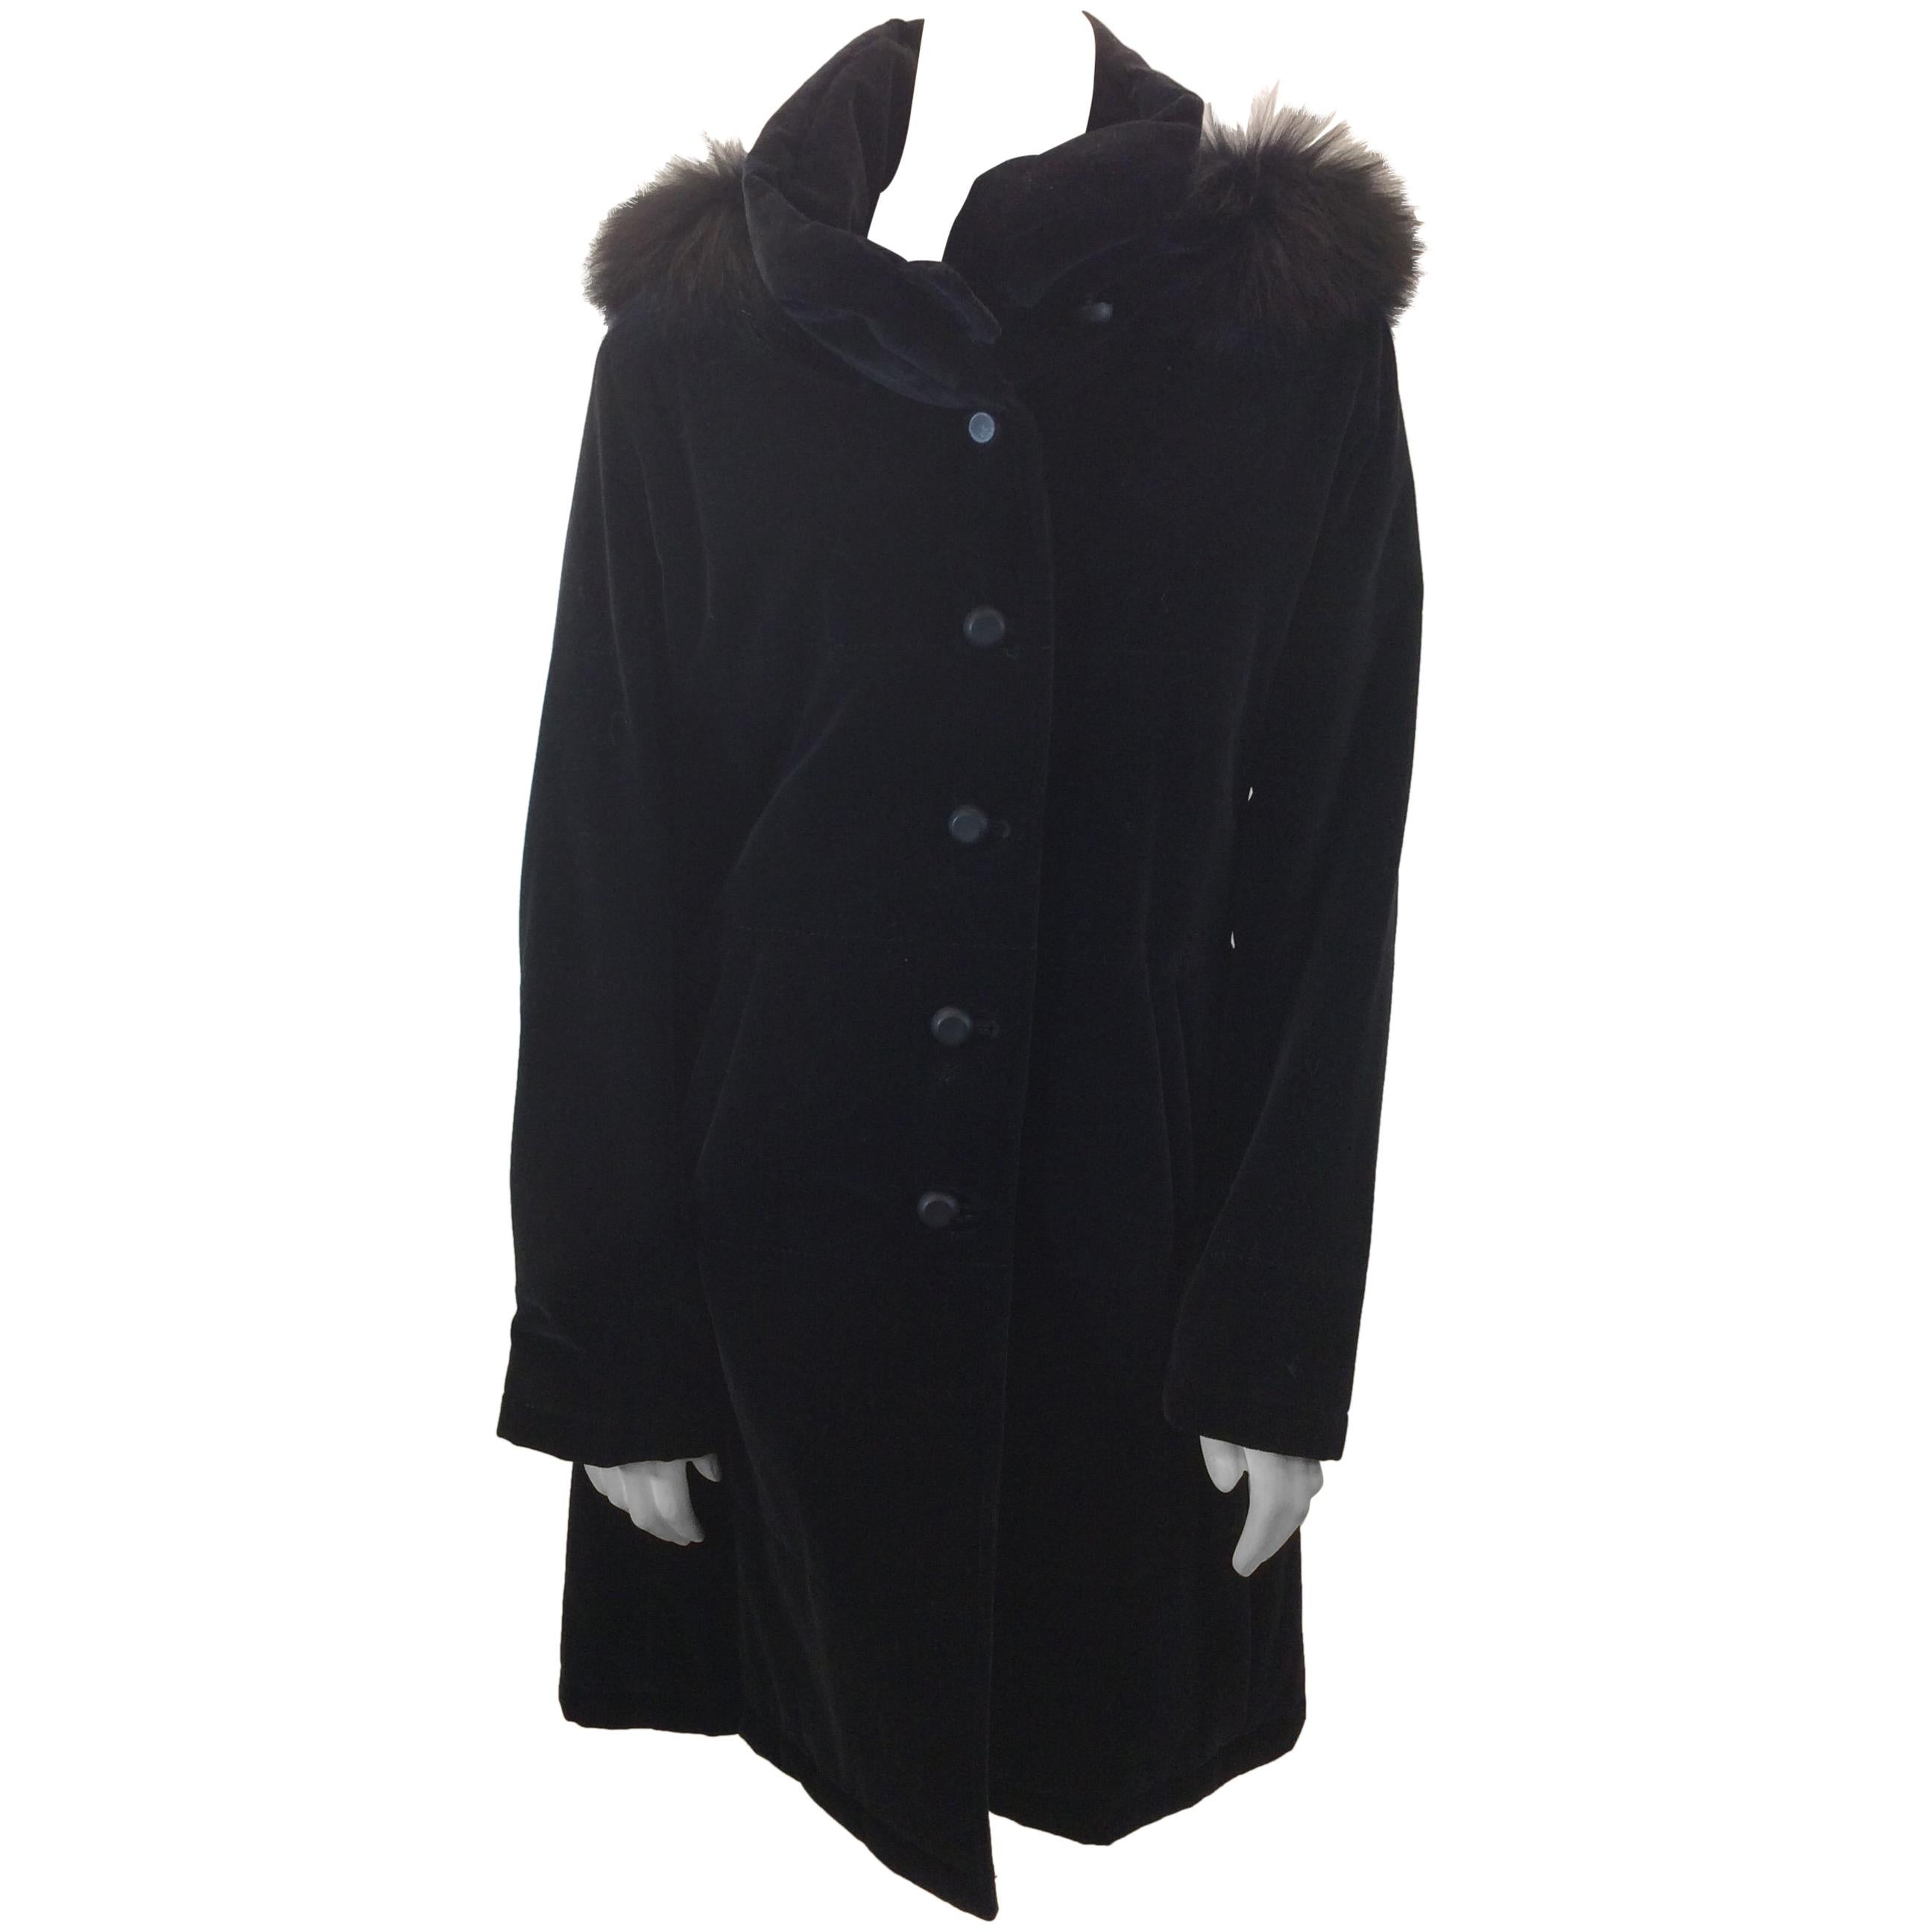 Jane Post Black Velvet with Fox Fur Trim Coat NWT For Sale